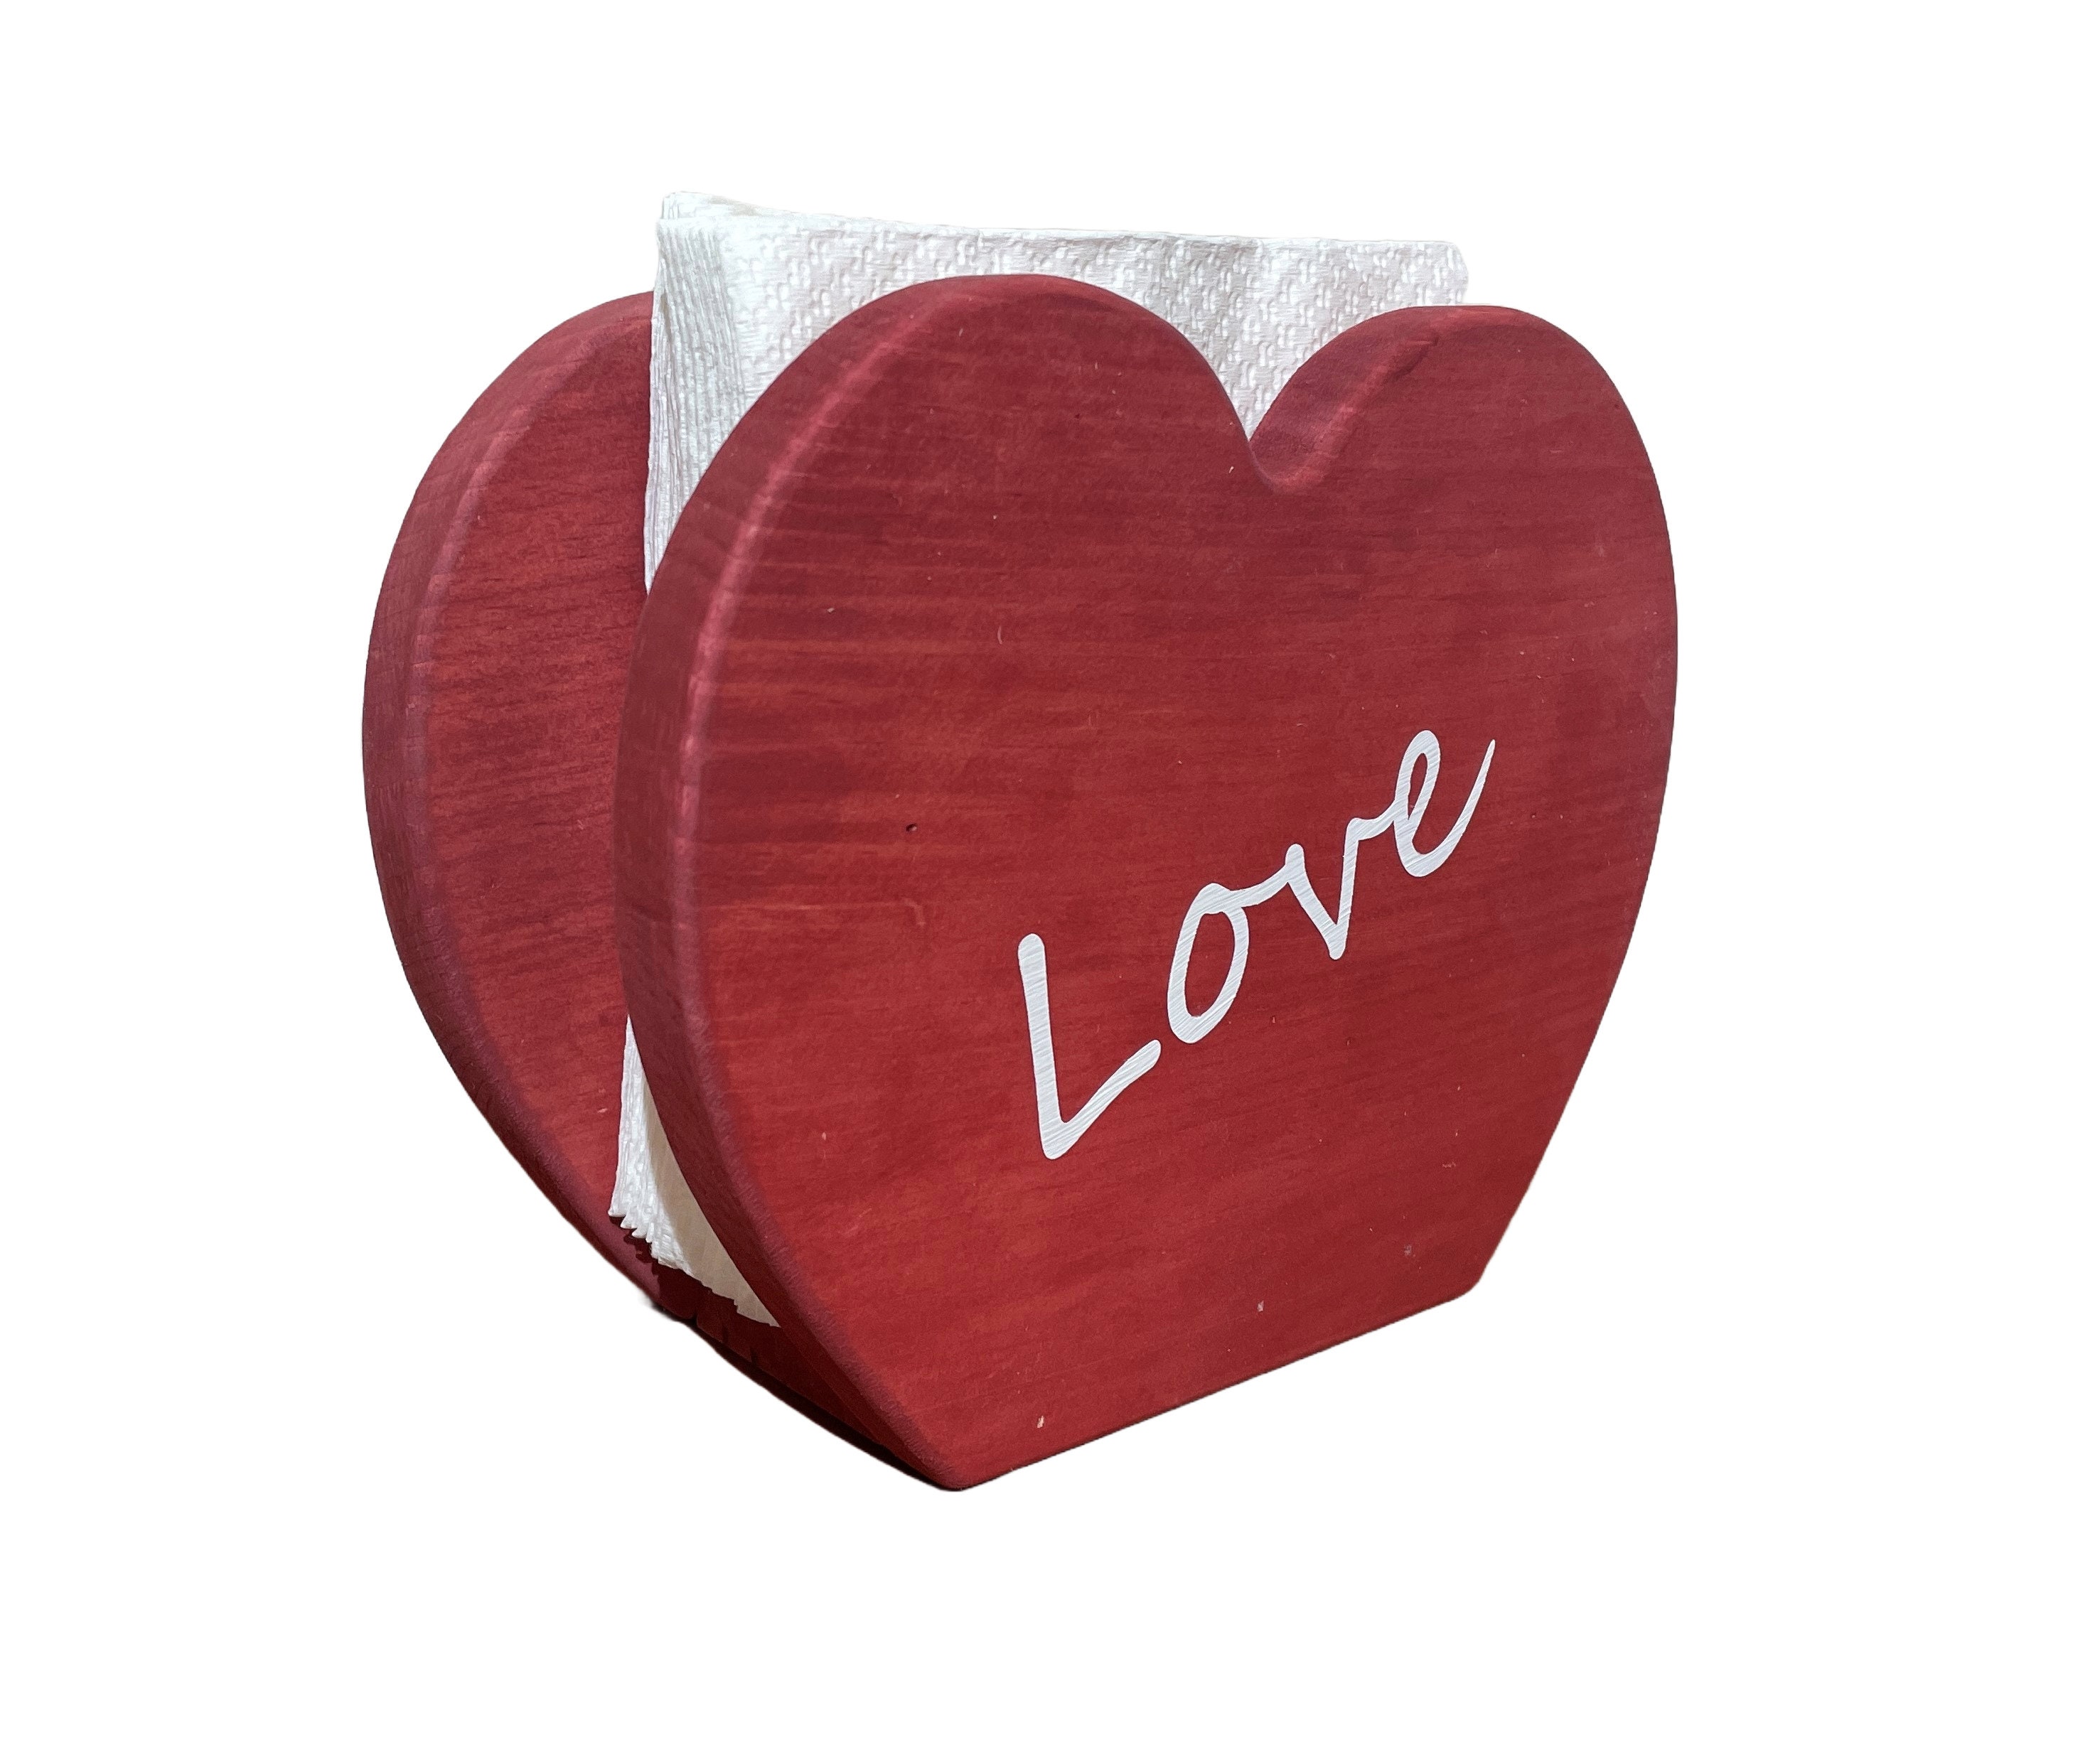 Rustic Wood Heart Ornaments, Set of 4, Hanging Valentine Wood Hearts,  Rustic Valentine Hearts, Distressed Hearts 